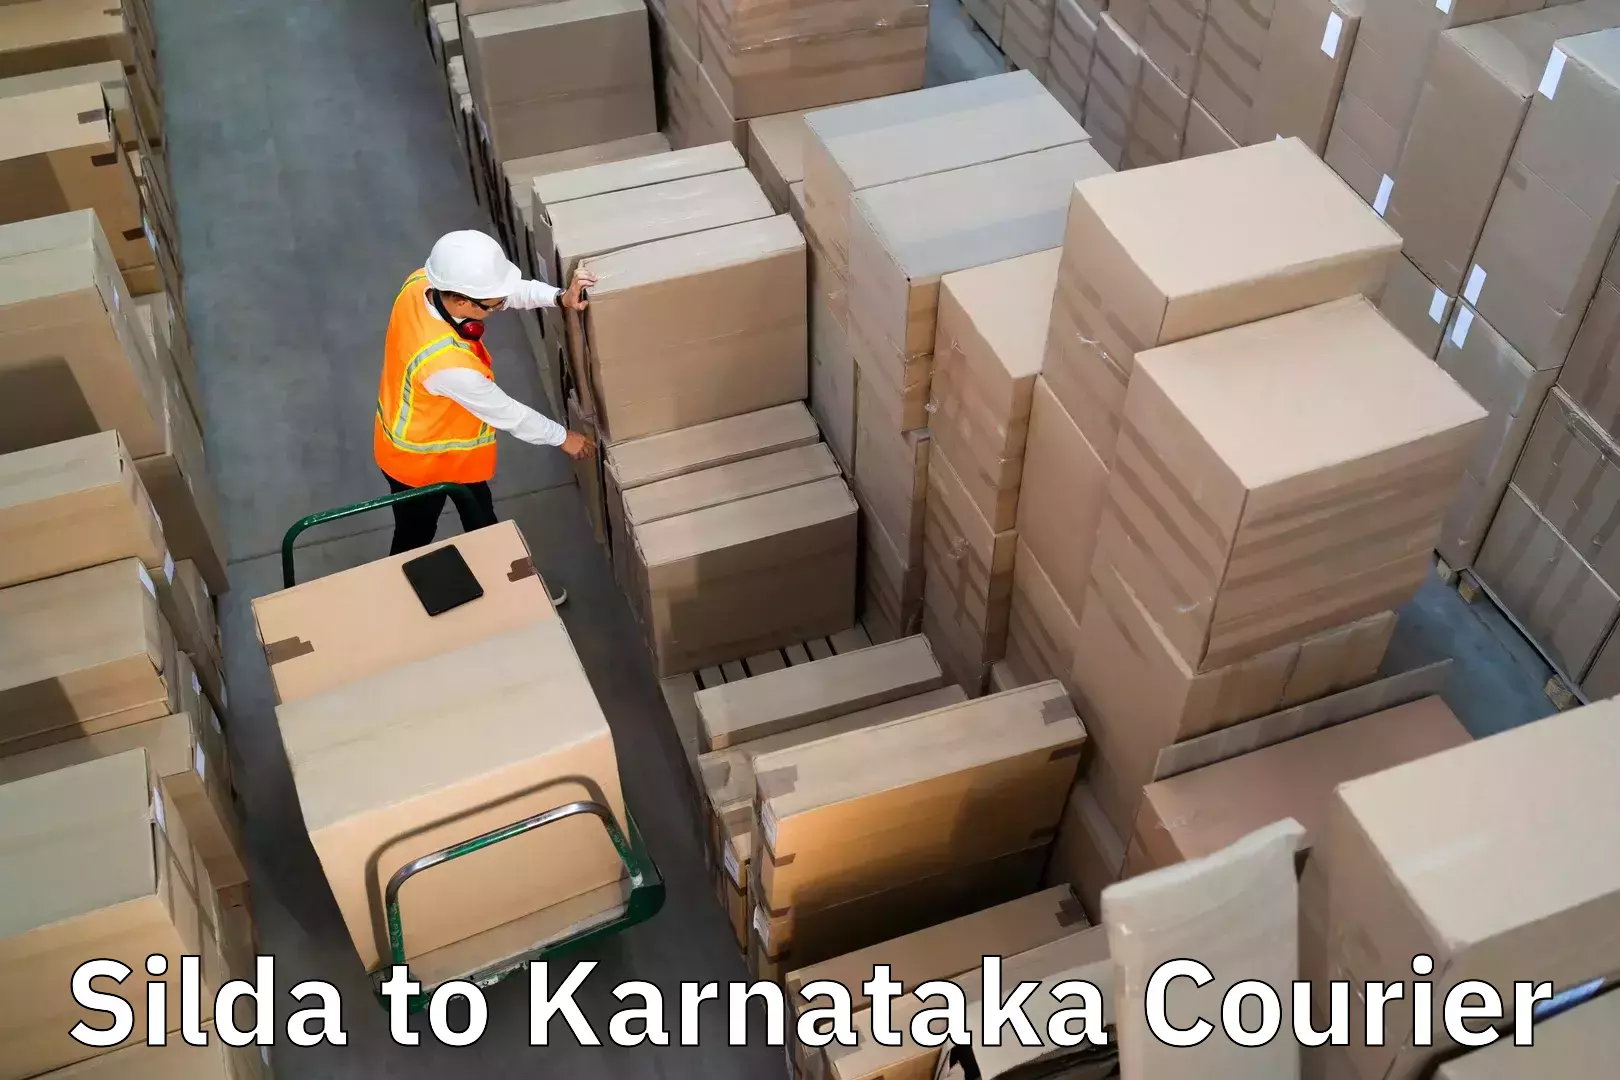 Luggage transport company Silda to Karnataka